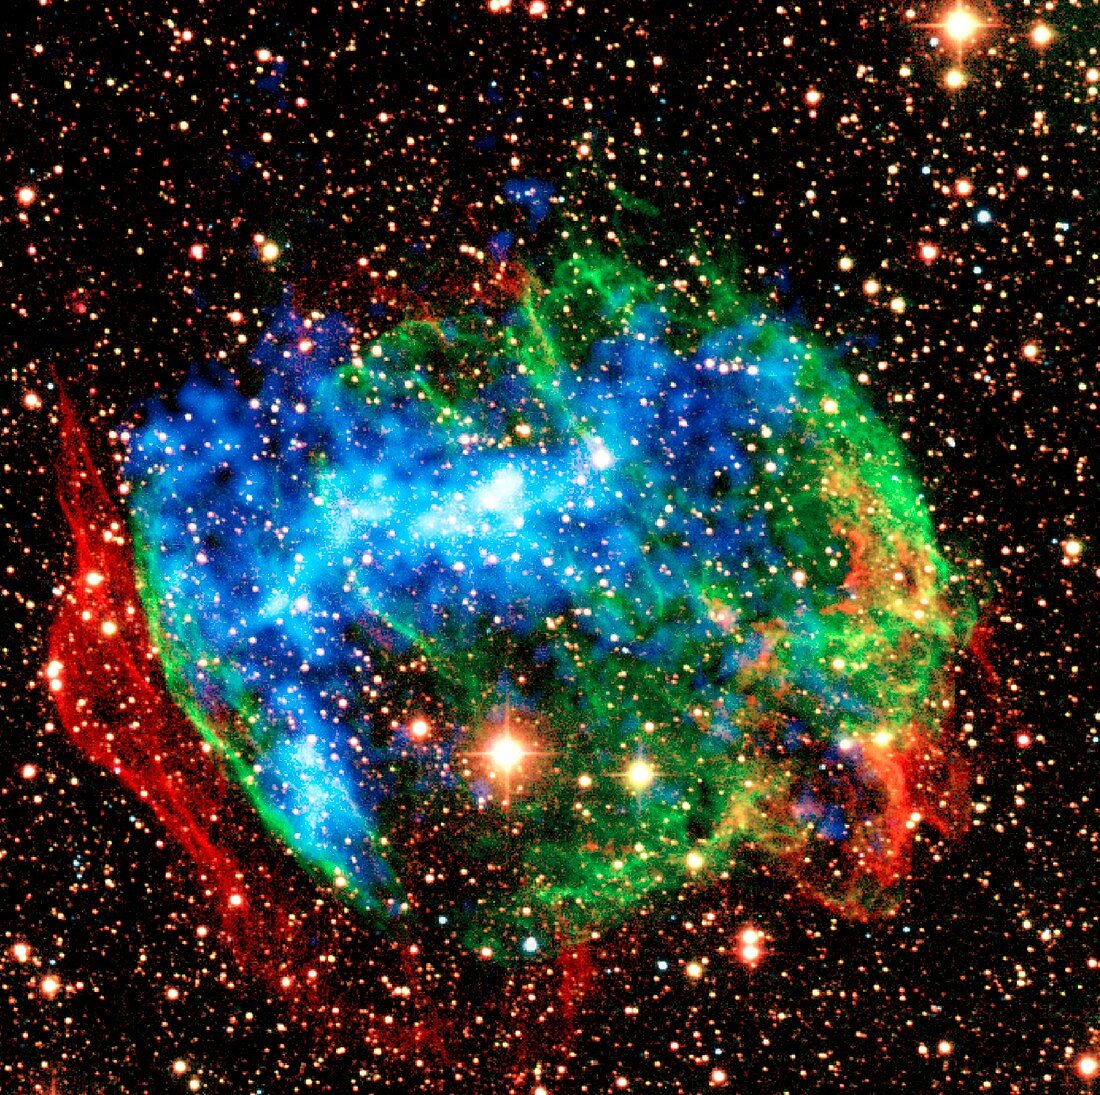 Supernova remnant W49B